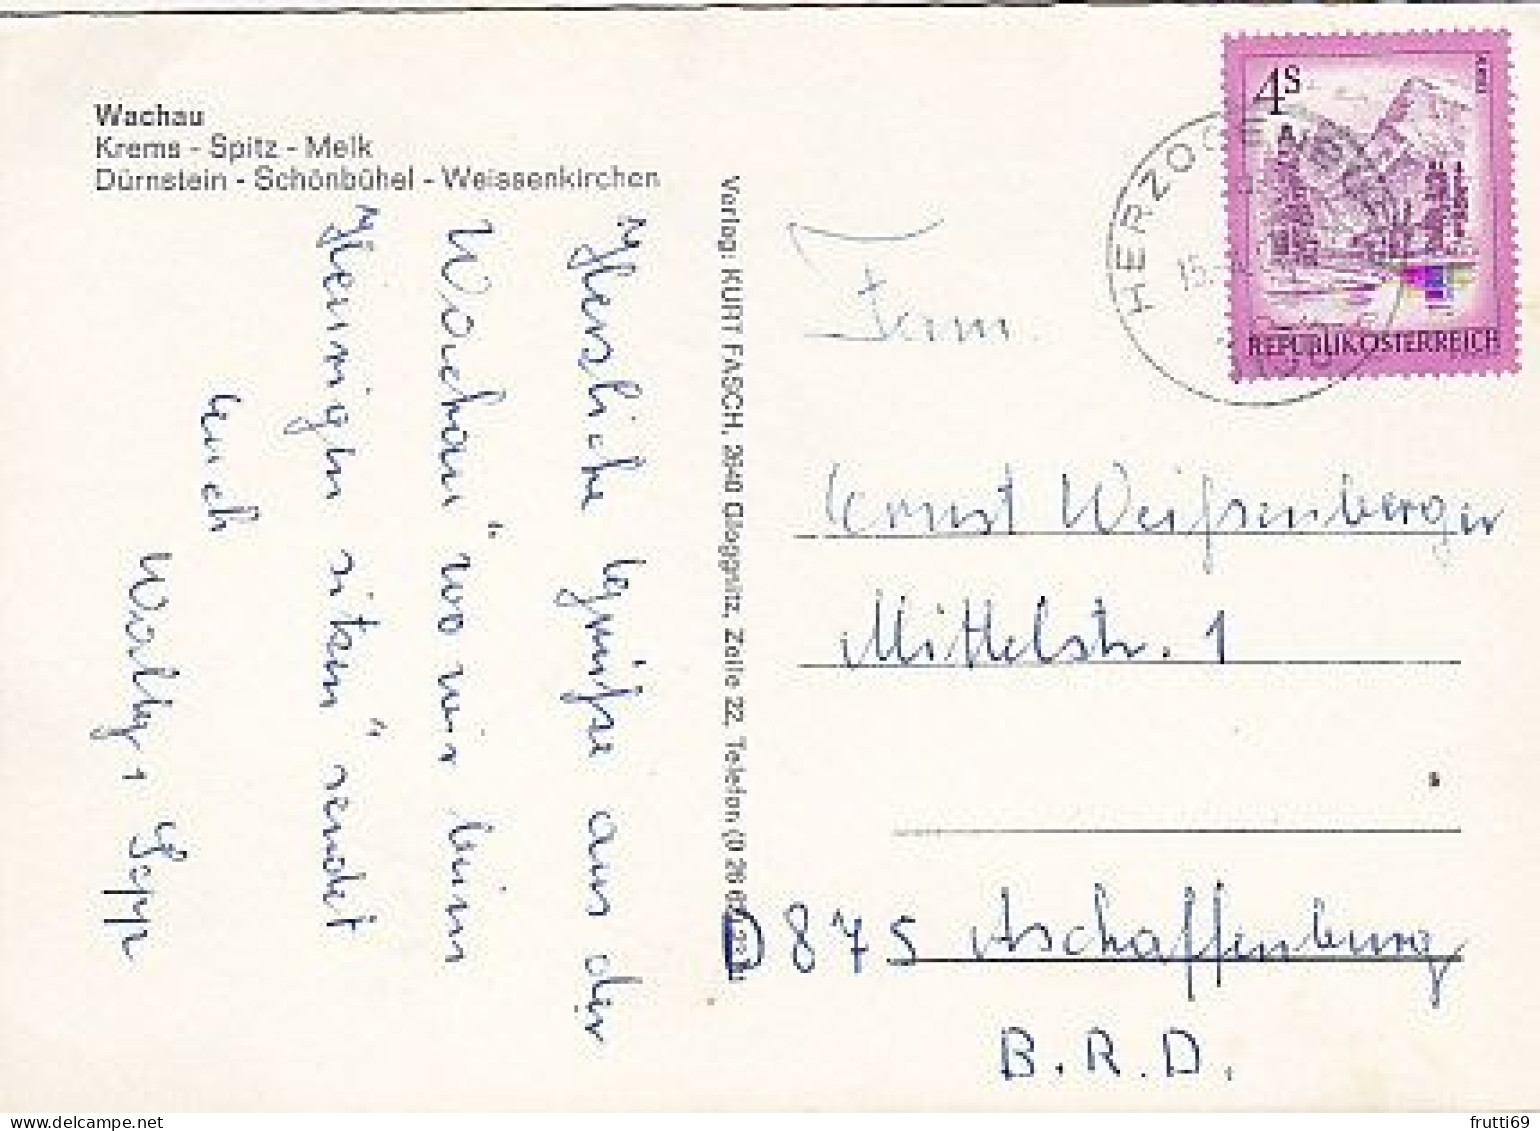 AK 191243 AUSTRIA - Wachau - Wachau